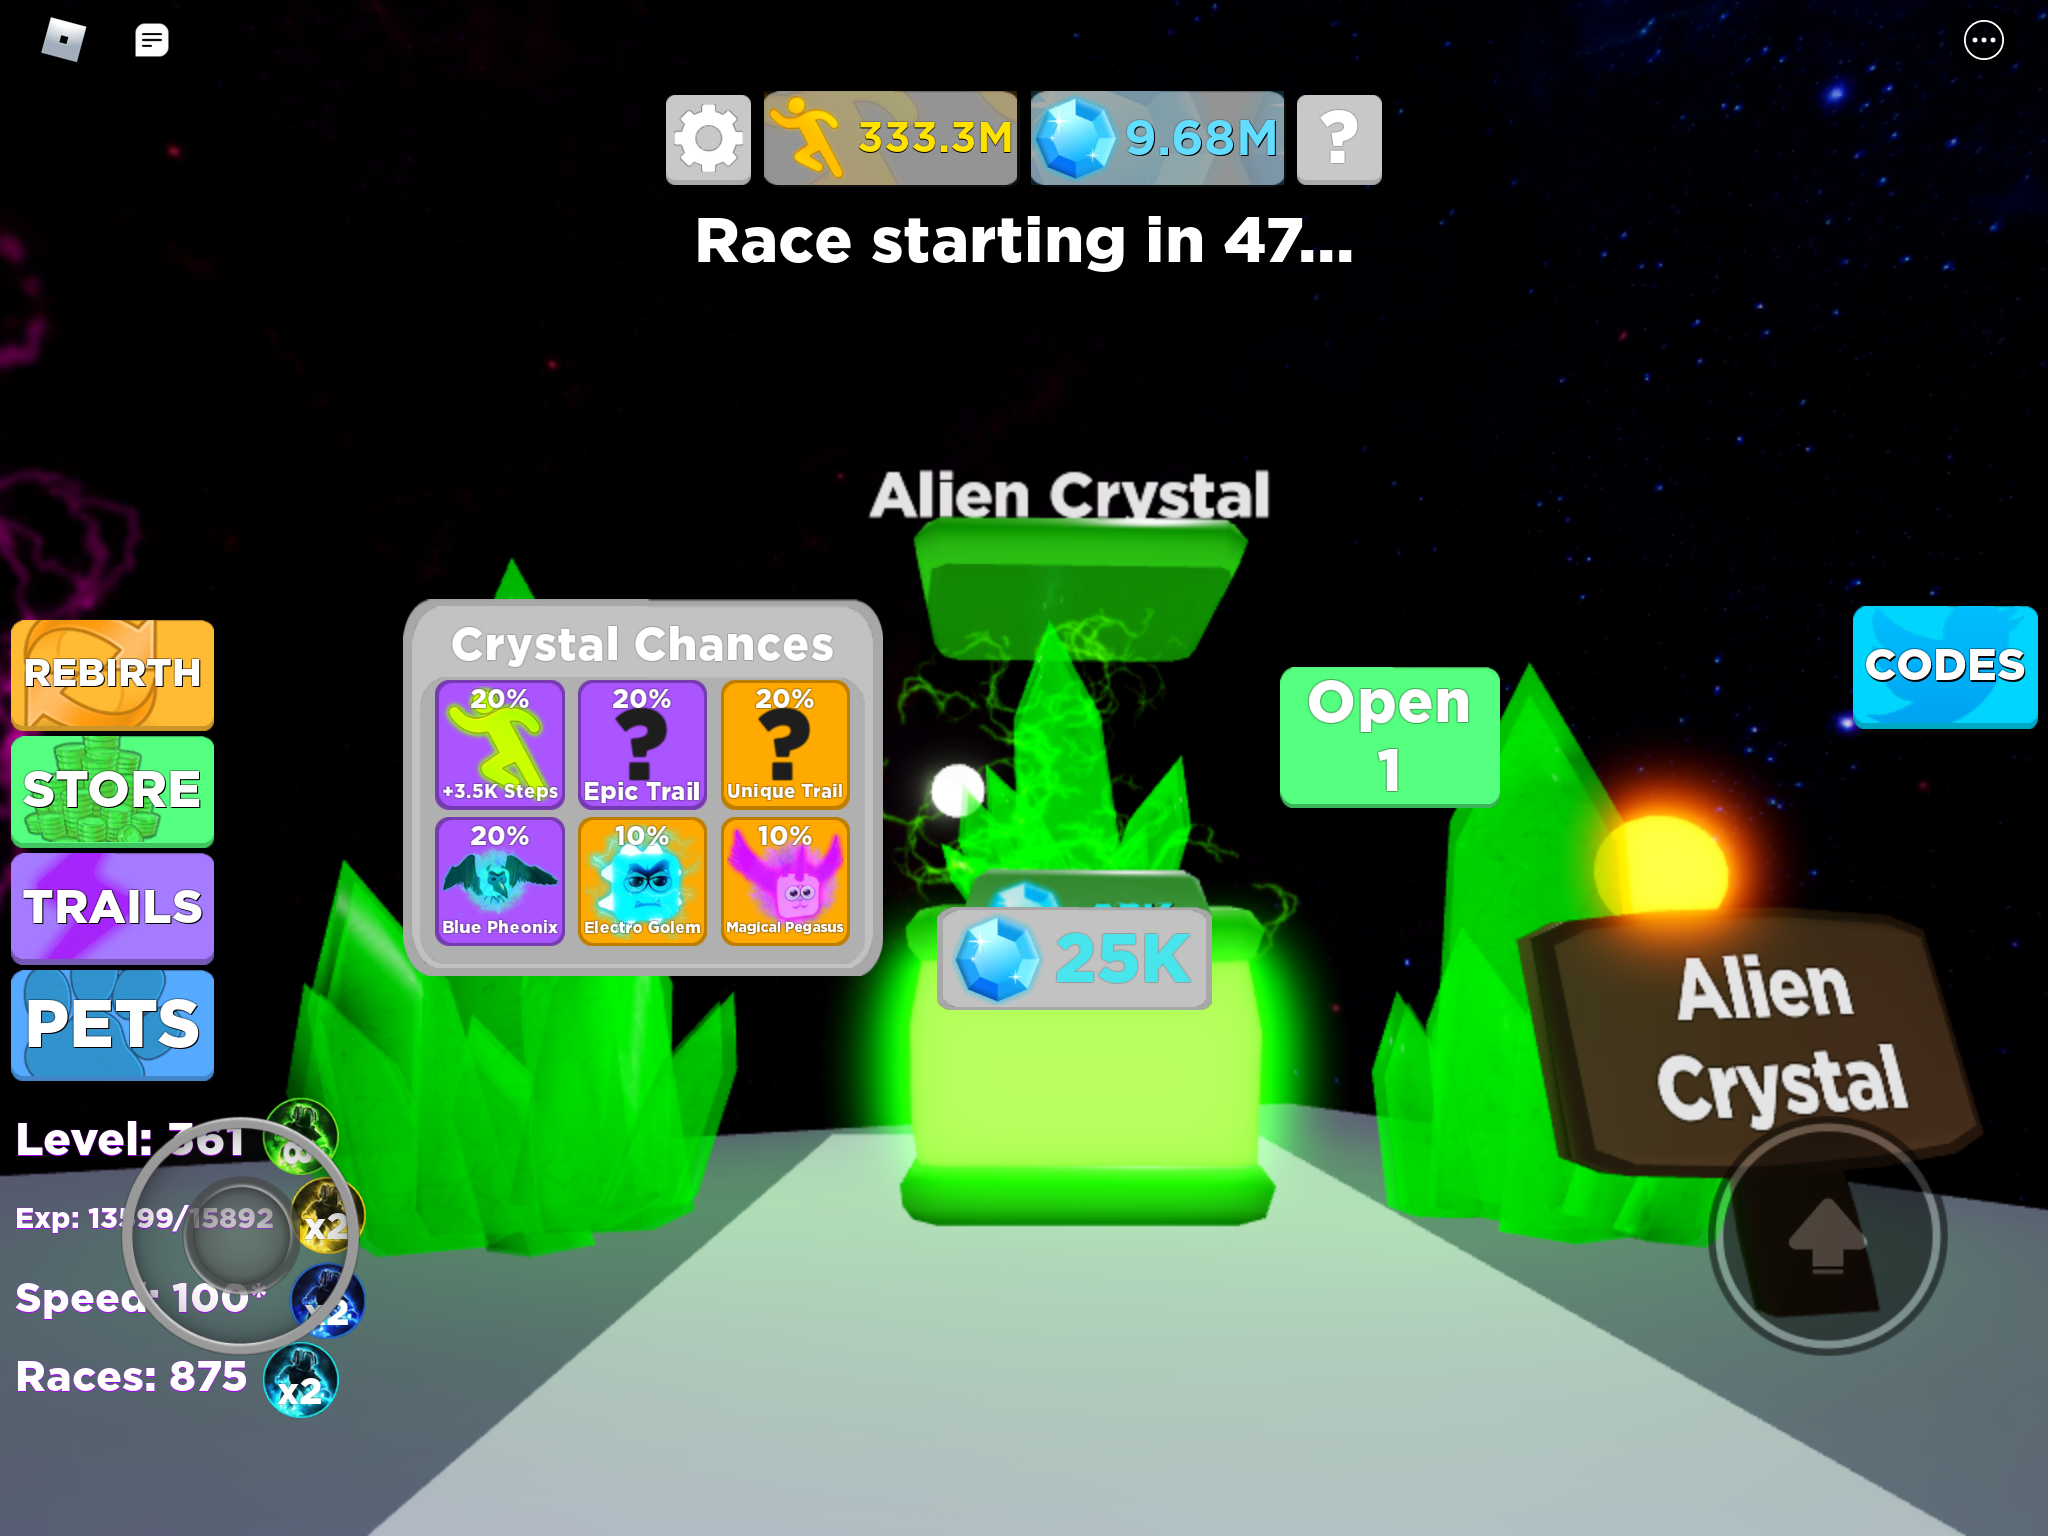 Alien Crystal Legends Of Speed Wiki Fandom - codes roblox legent of speed